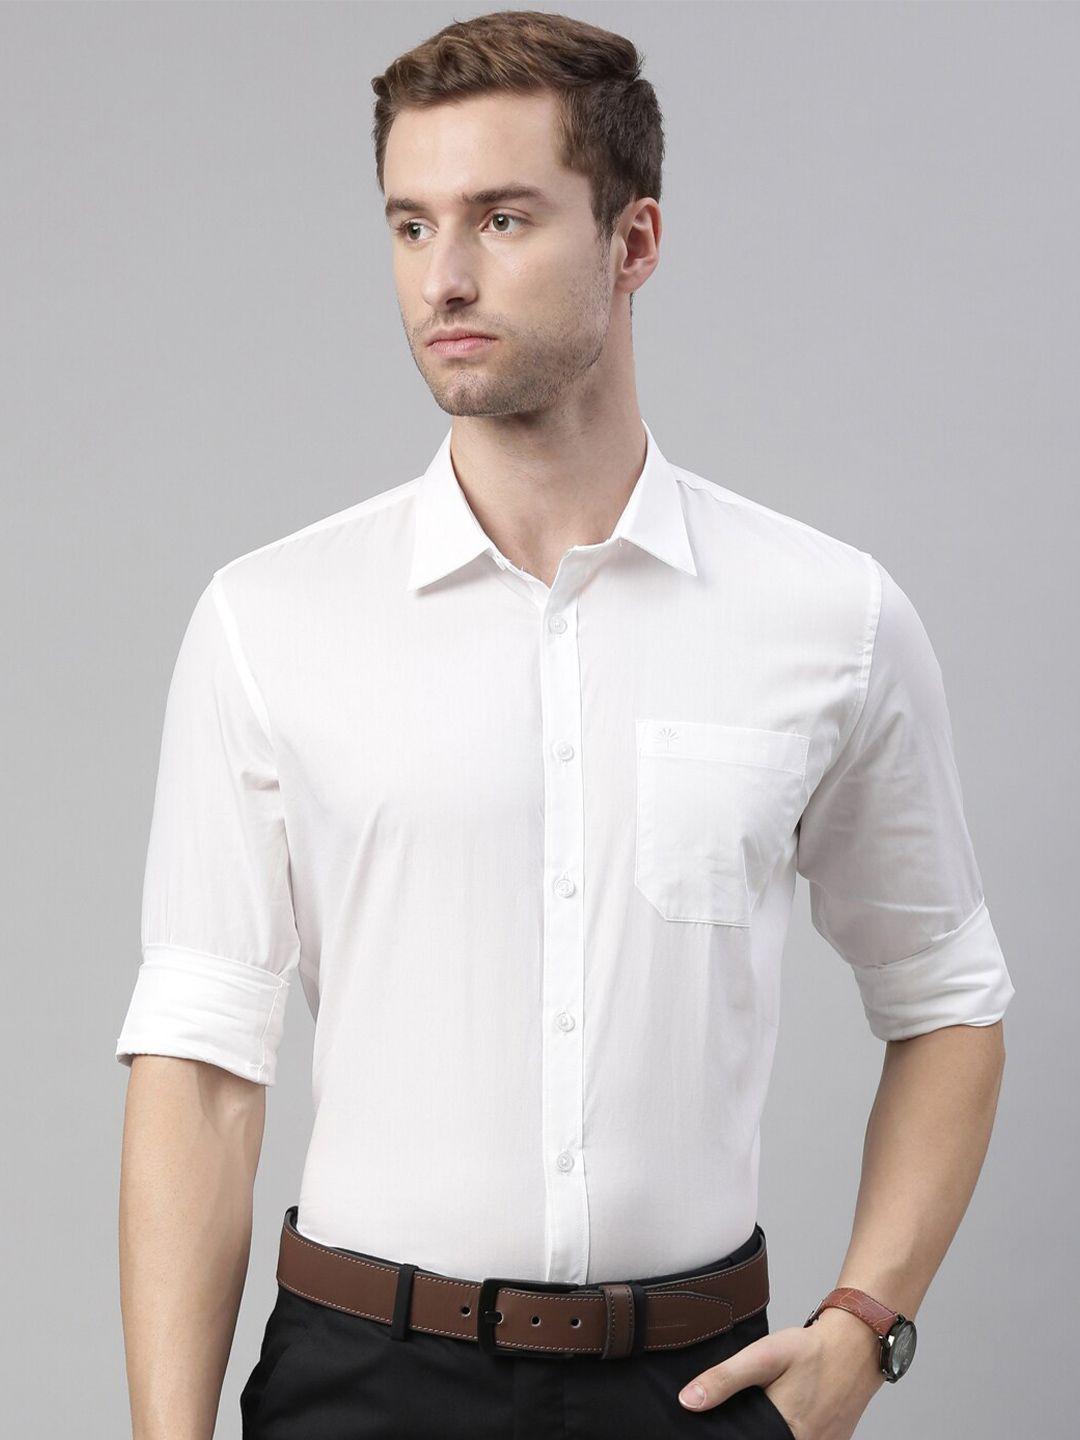 chennis men white slim fit formal shirt